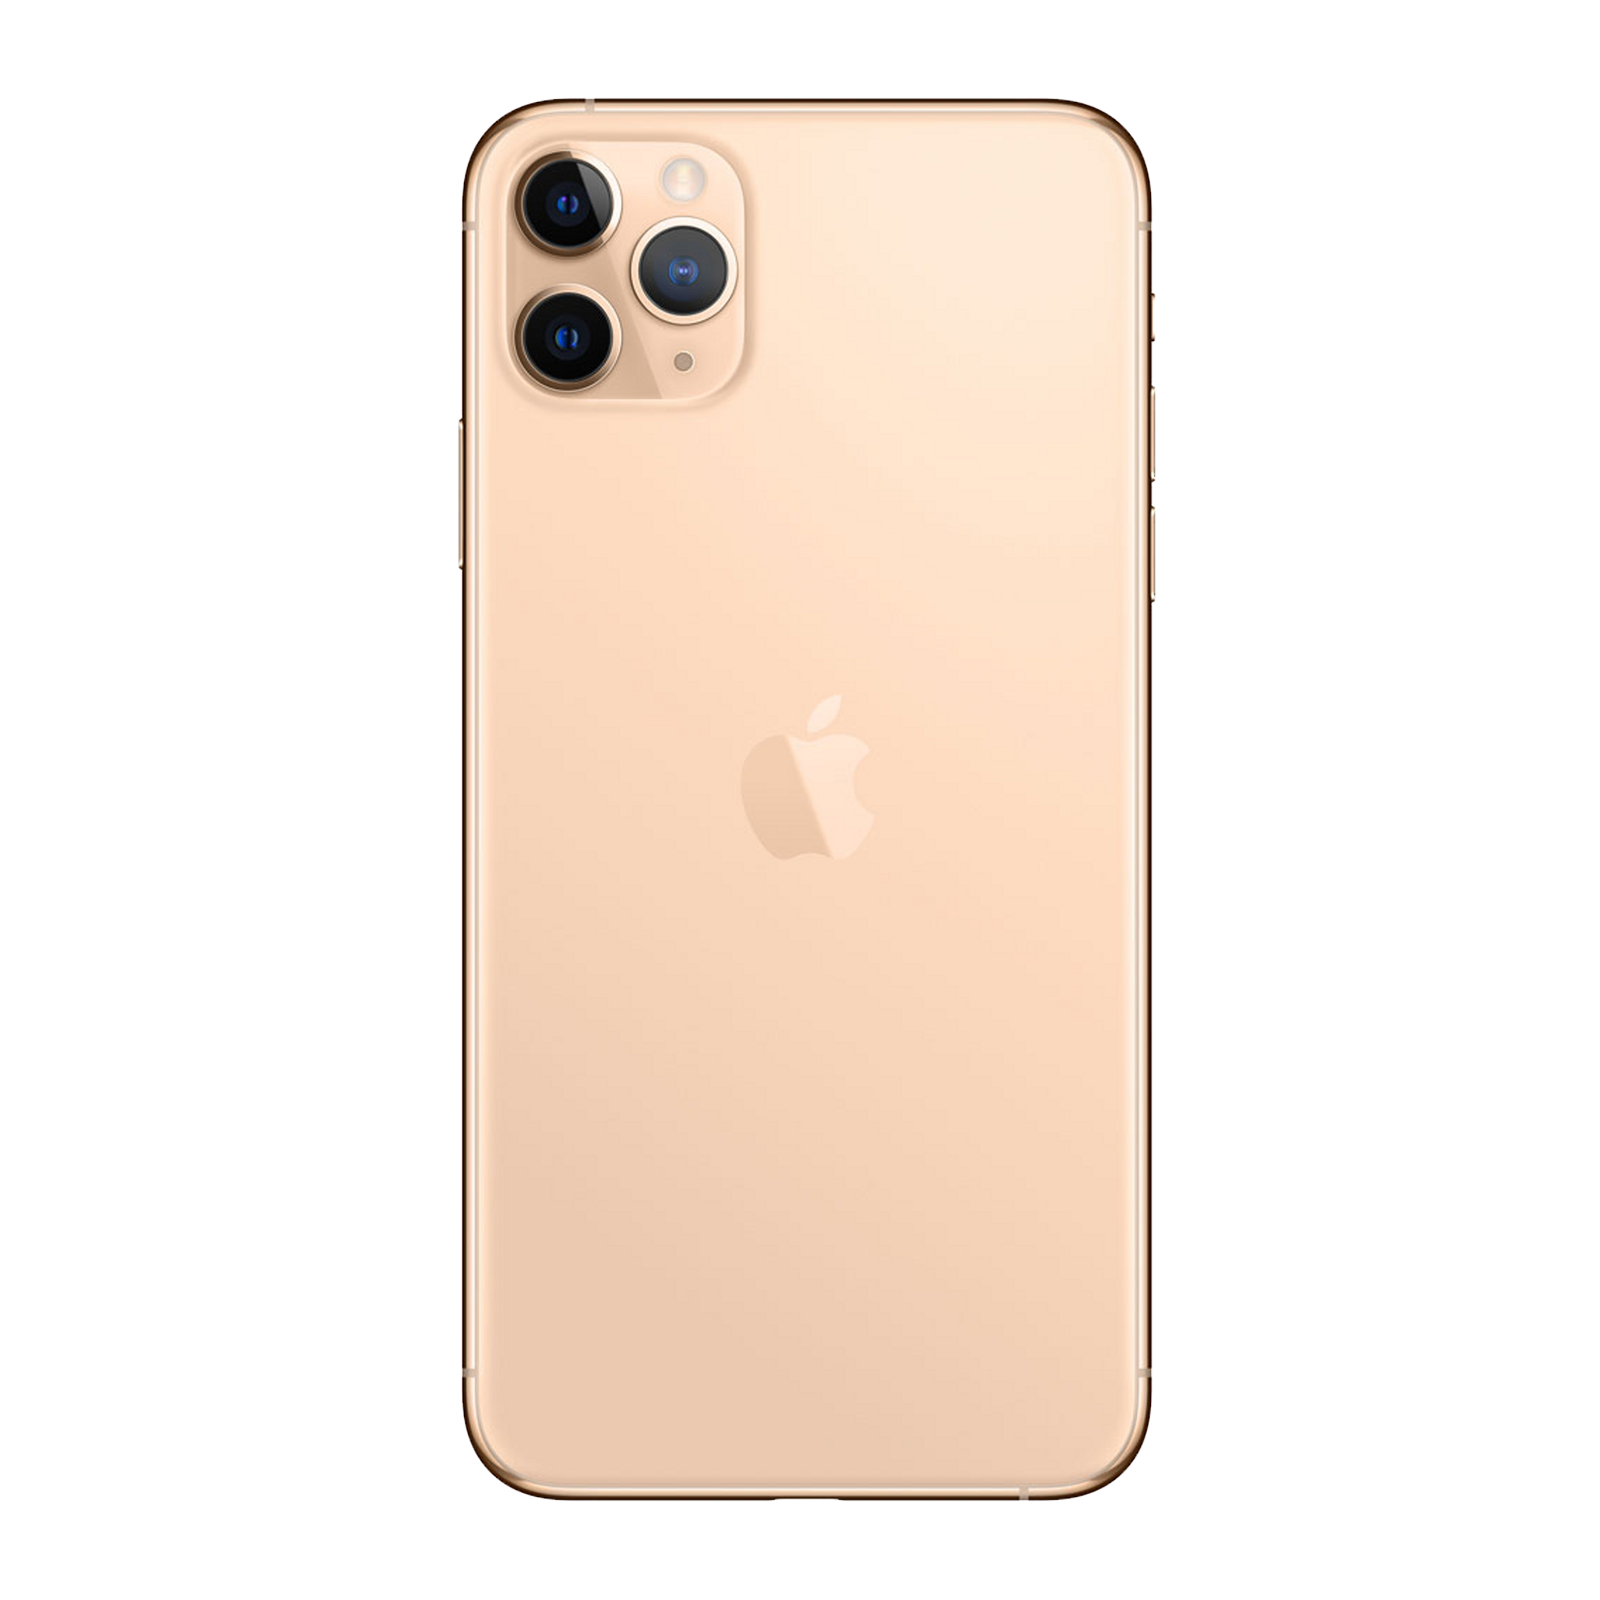 Apple iPhone 11 Pro Max 256GB Gold Pristine - Unlocked